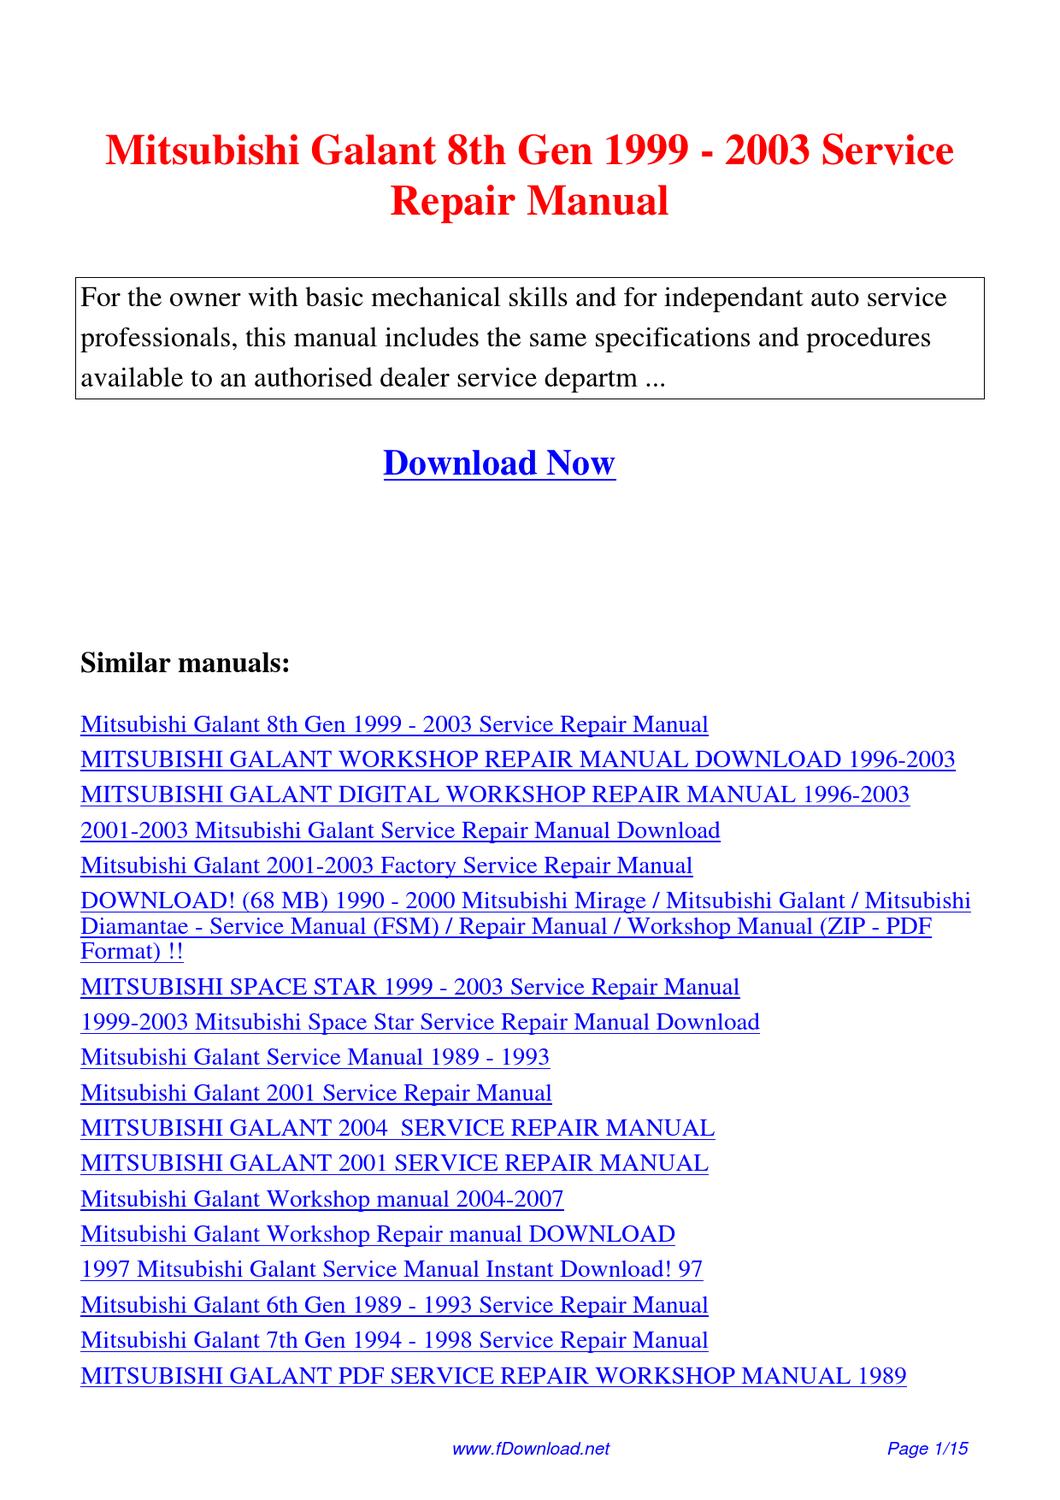 2003 mitsubishi galant repair manual download blogspot